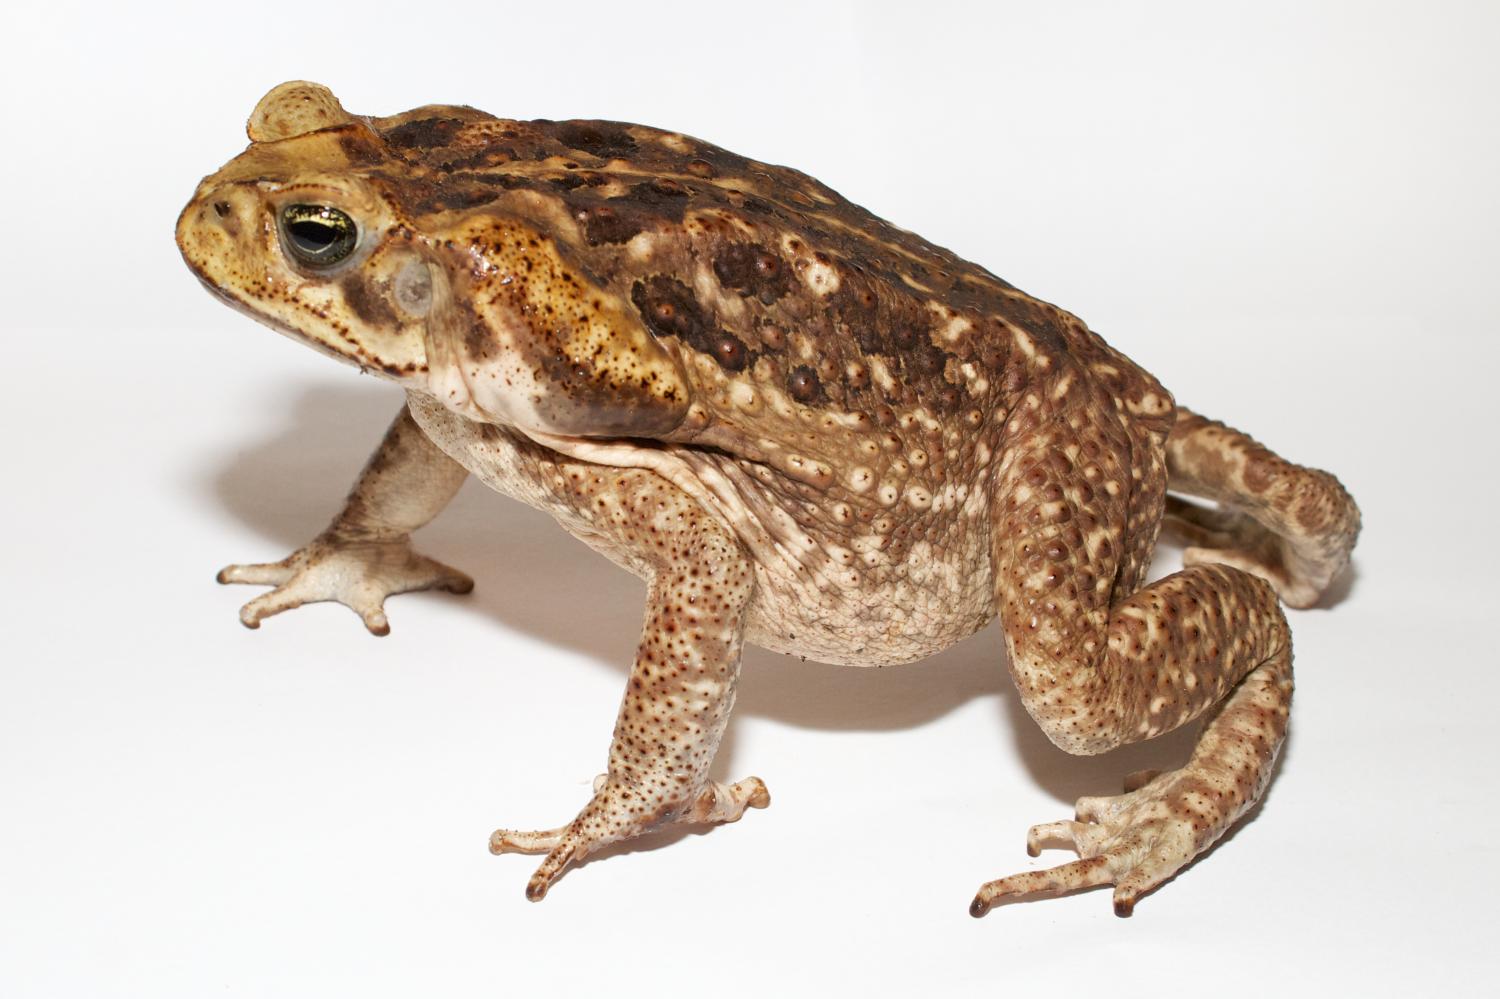 Skin and glandular secretions from the cane toad, Rhinella marinus